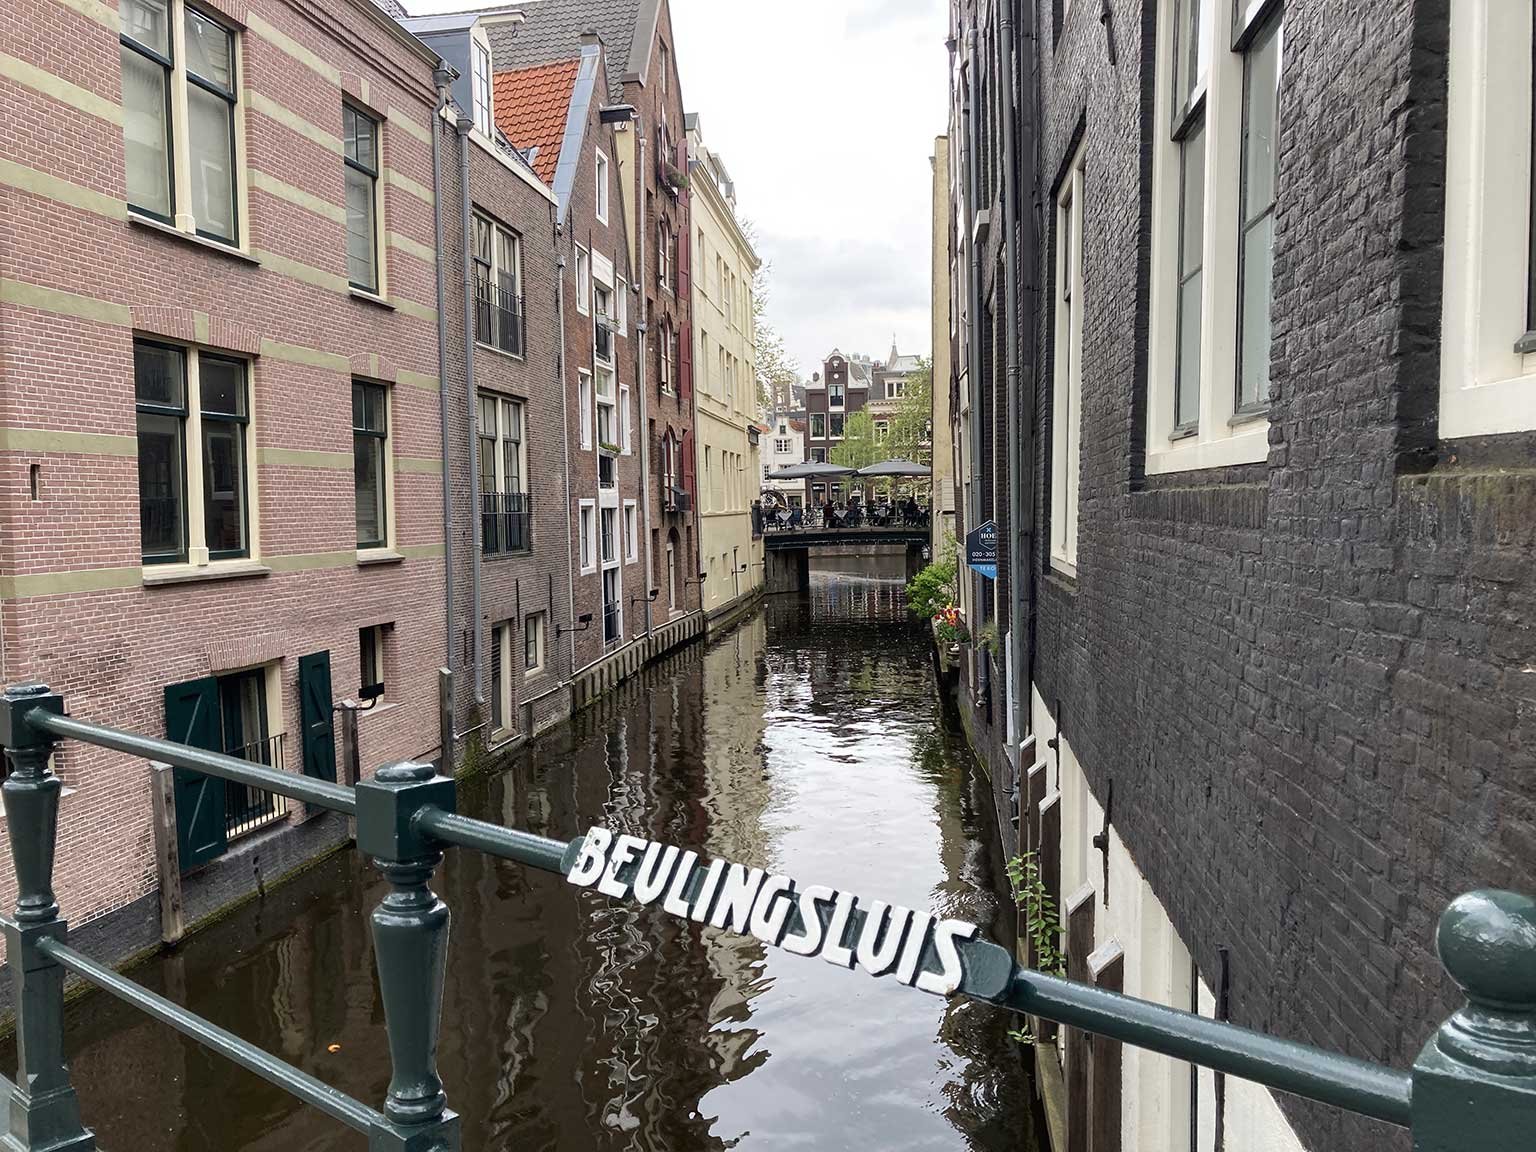 Beulingsloot seen from the Beulingsluis bridge on the Herengracht, Amsterdam